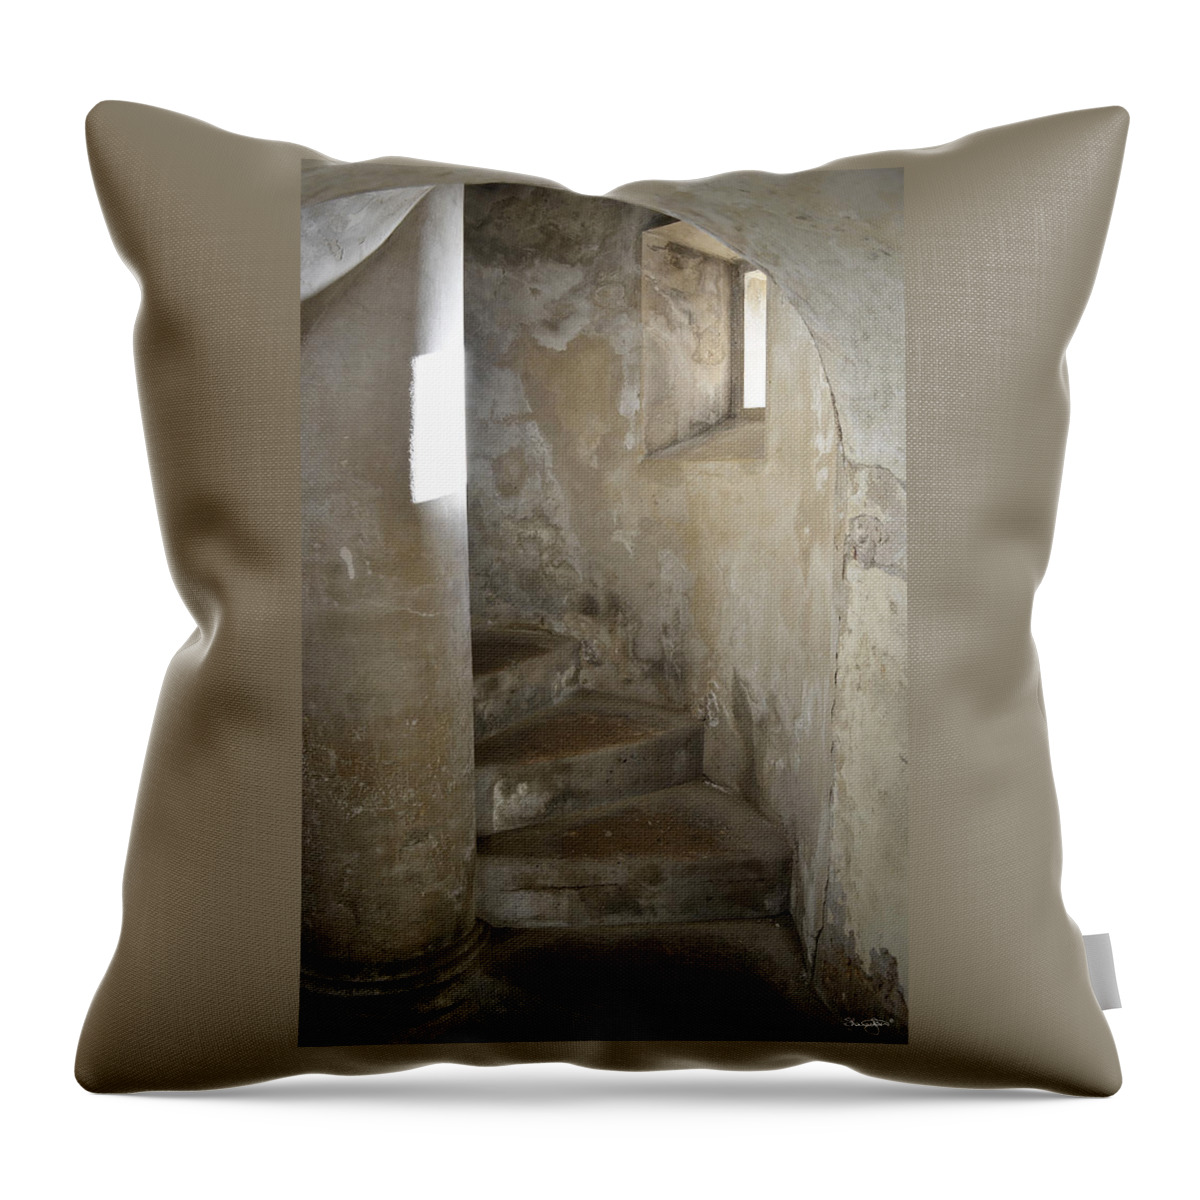 San Christobal Throw Pillow featuring the photograph San Christobal Staircase by Shanna Hyatt